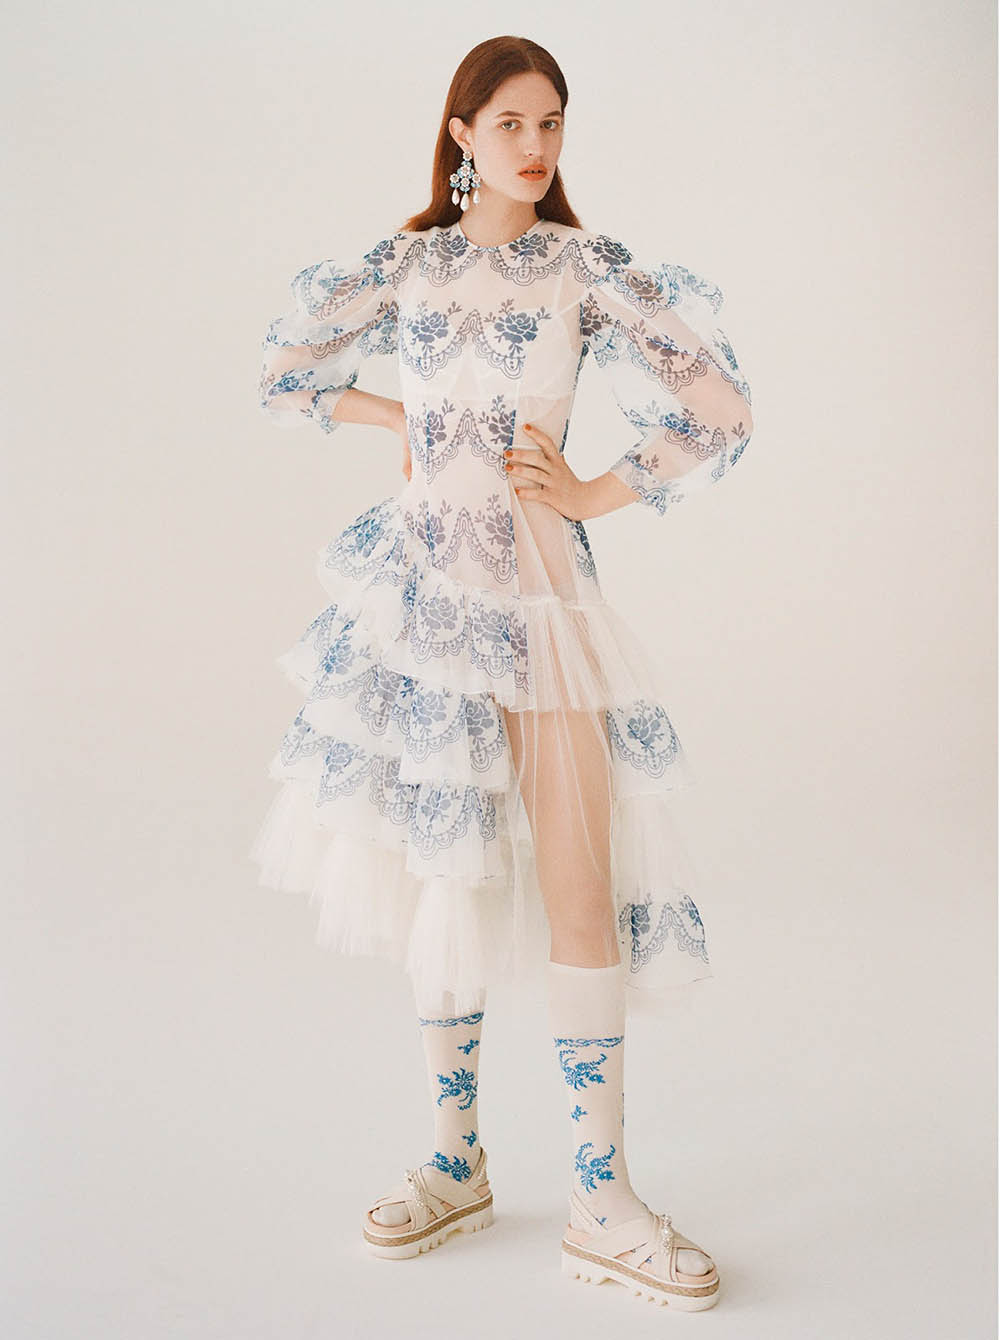 Julia Banas by Arseny Jabiev for Vogue Hong Kong March 2020